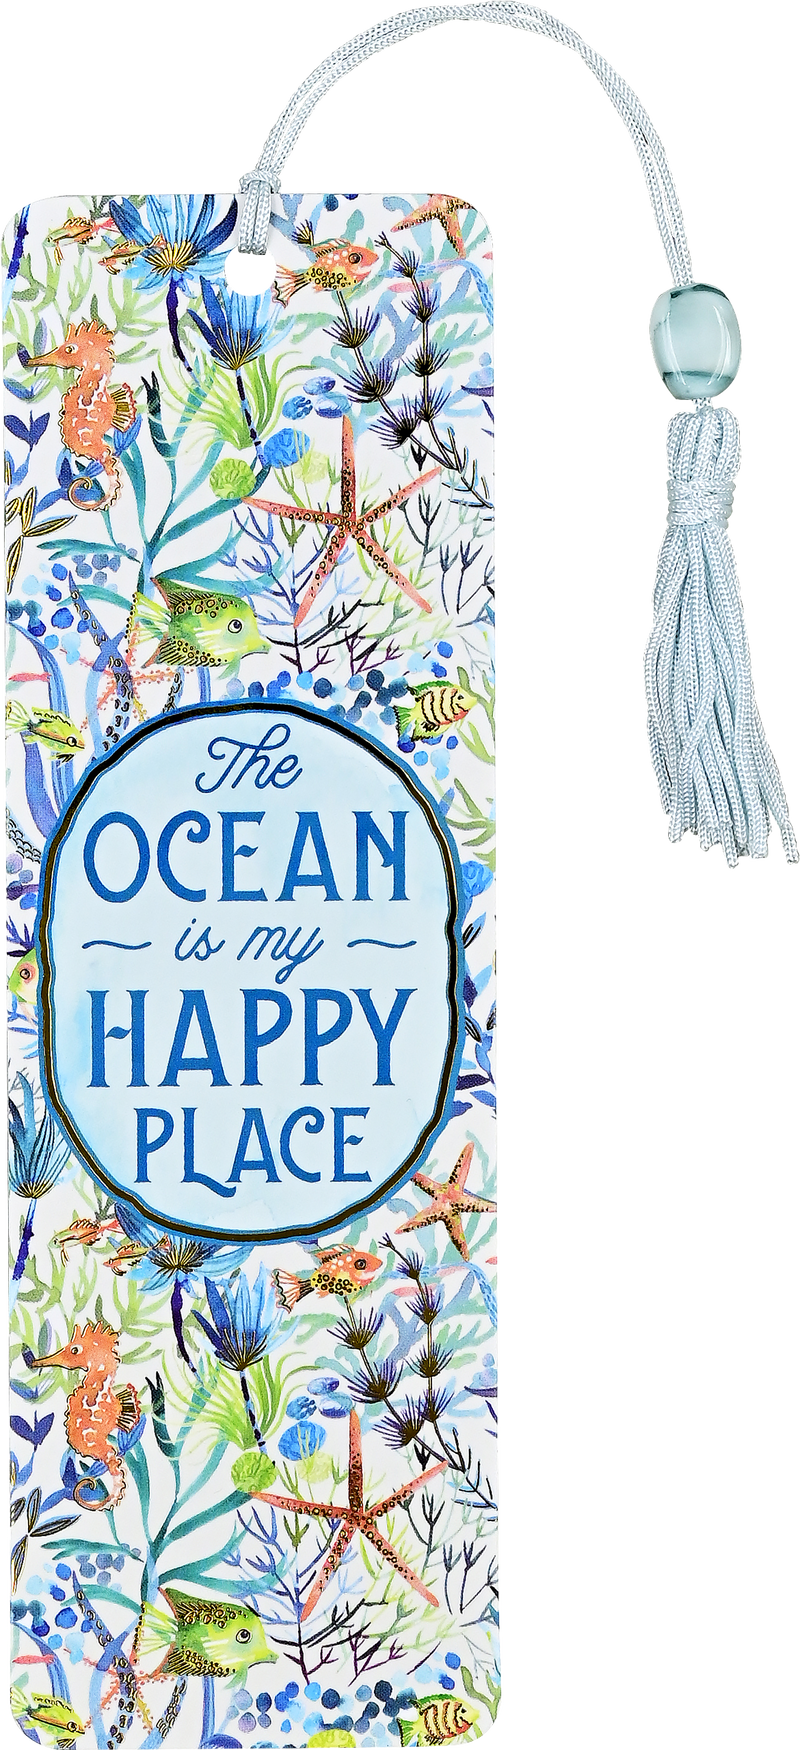 Ocean Dream Beaded Bookmark